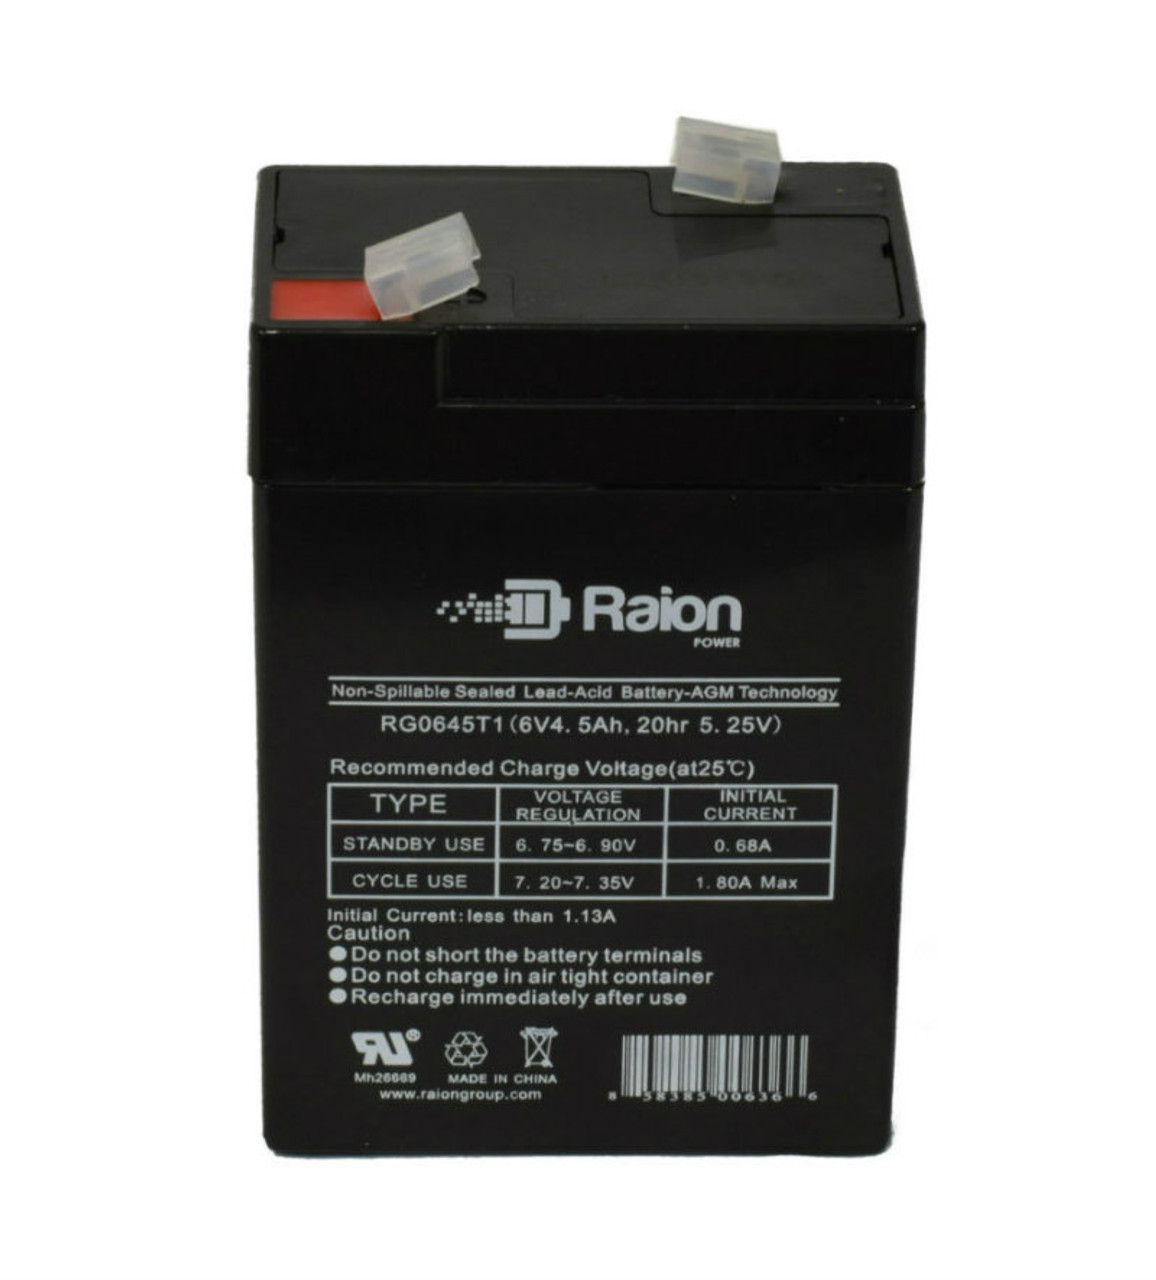 Raion Power RG0645T1 Replacement Battery Cartridge for Kinghero SJ6V5Ah